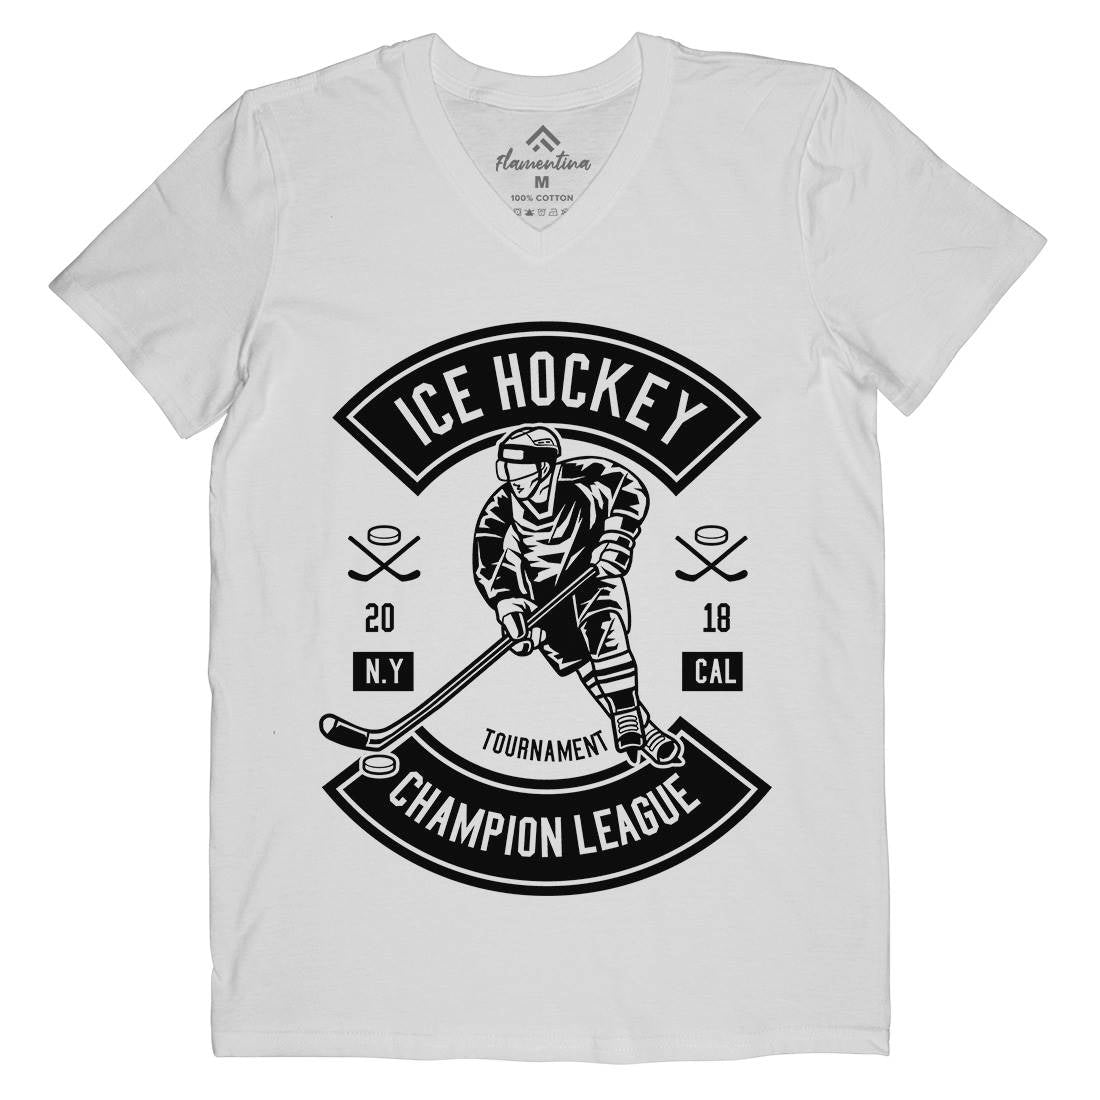 Ice Hockey Champion League Mens V-Neck T-Shirt Sport B564